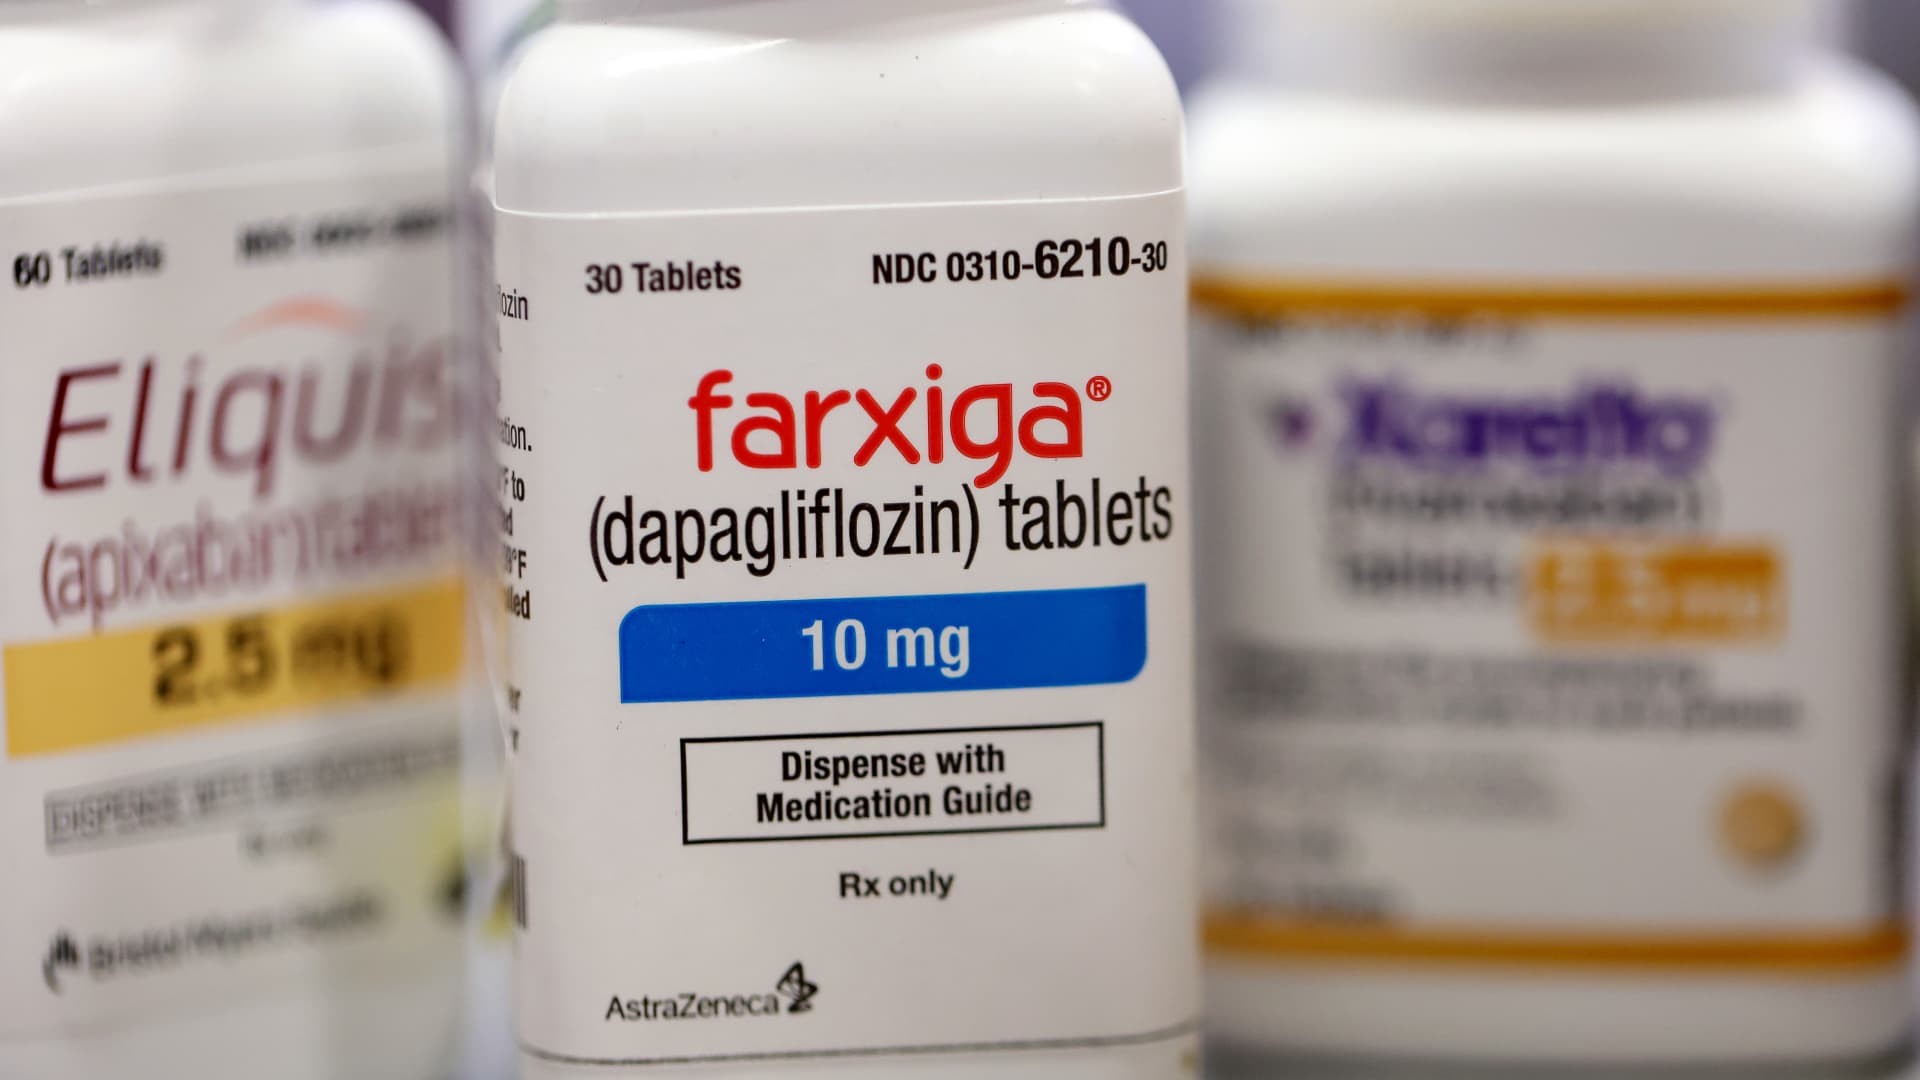 Merck, AstraZeneca, Bristol Myers Squibb to participate in Medicare drug price negotiations